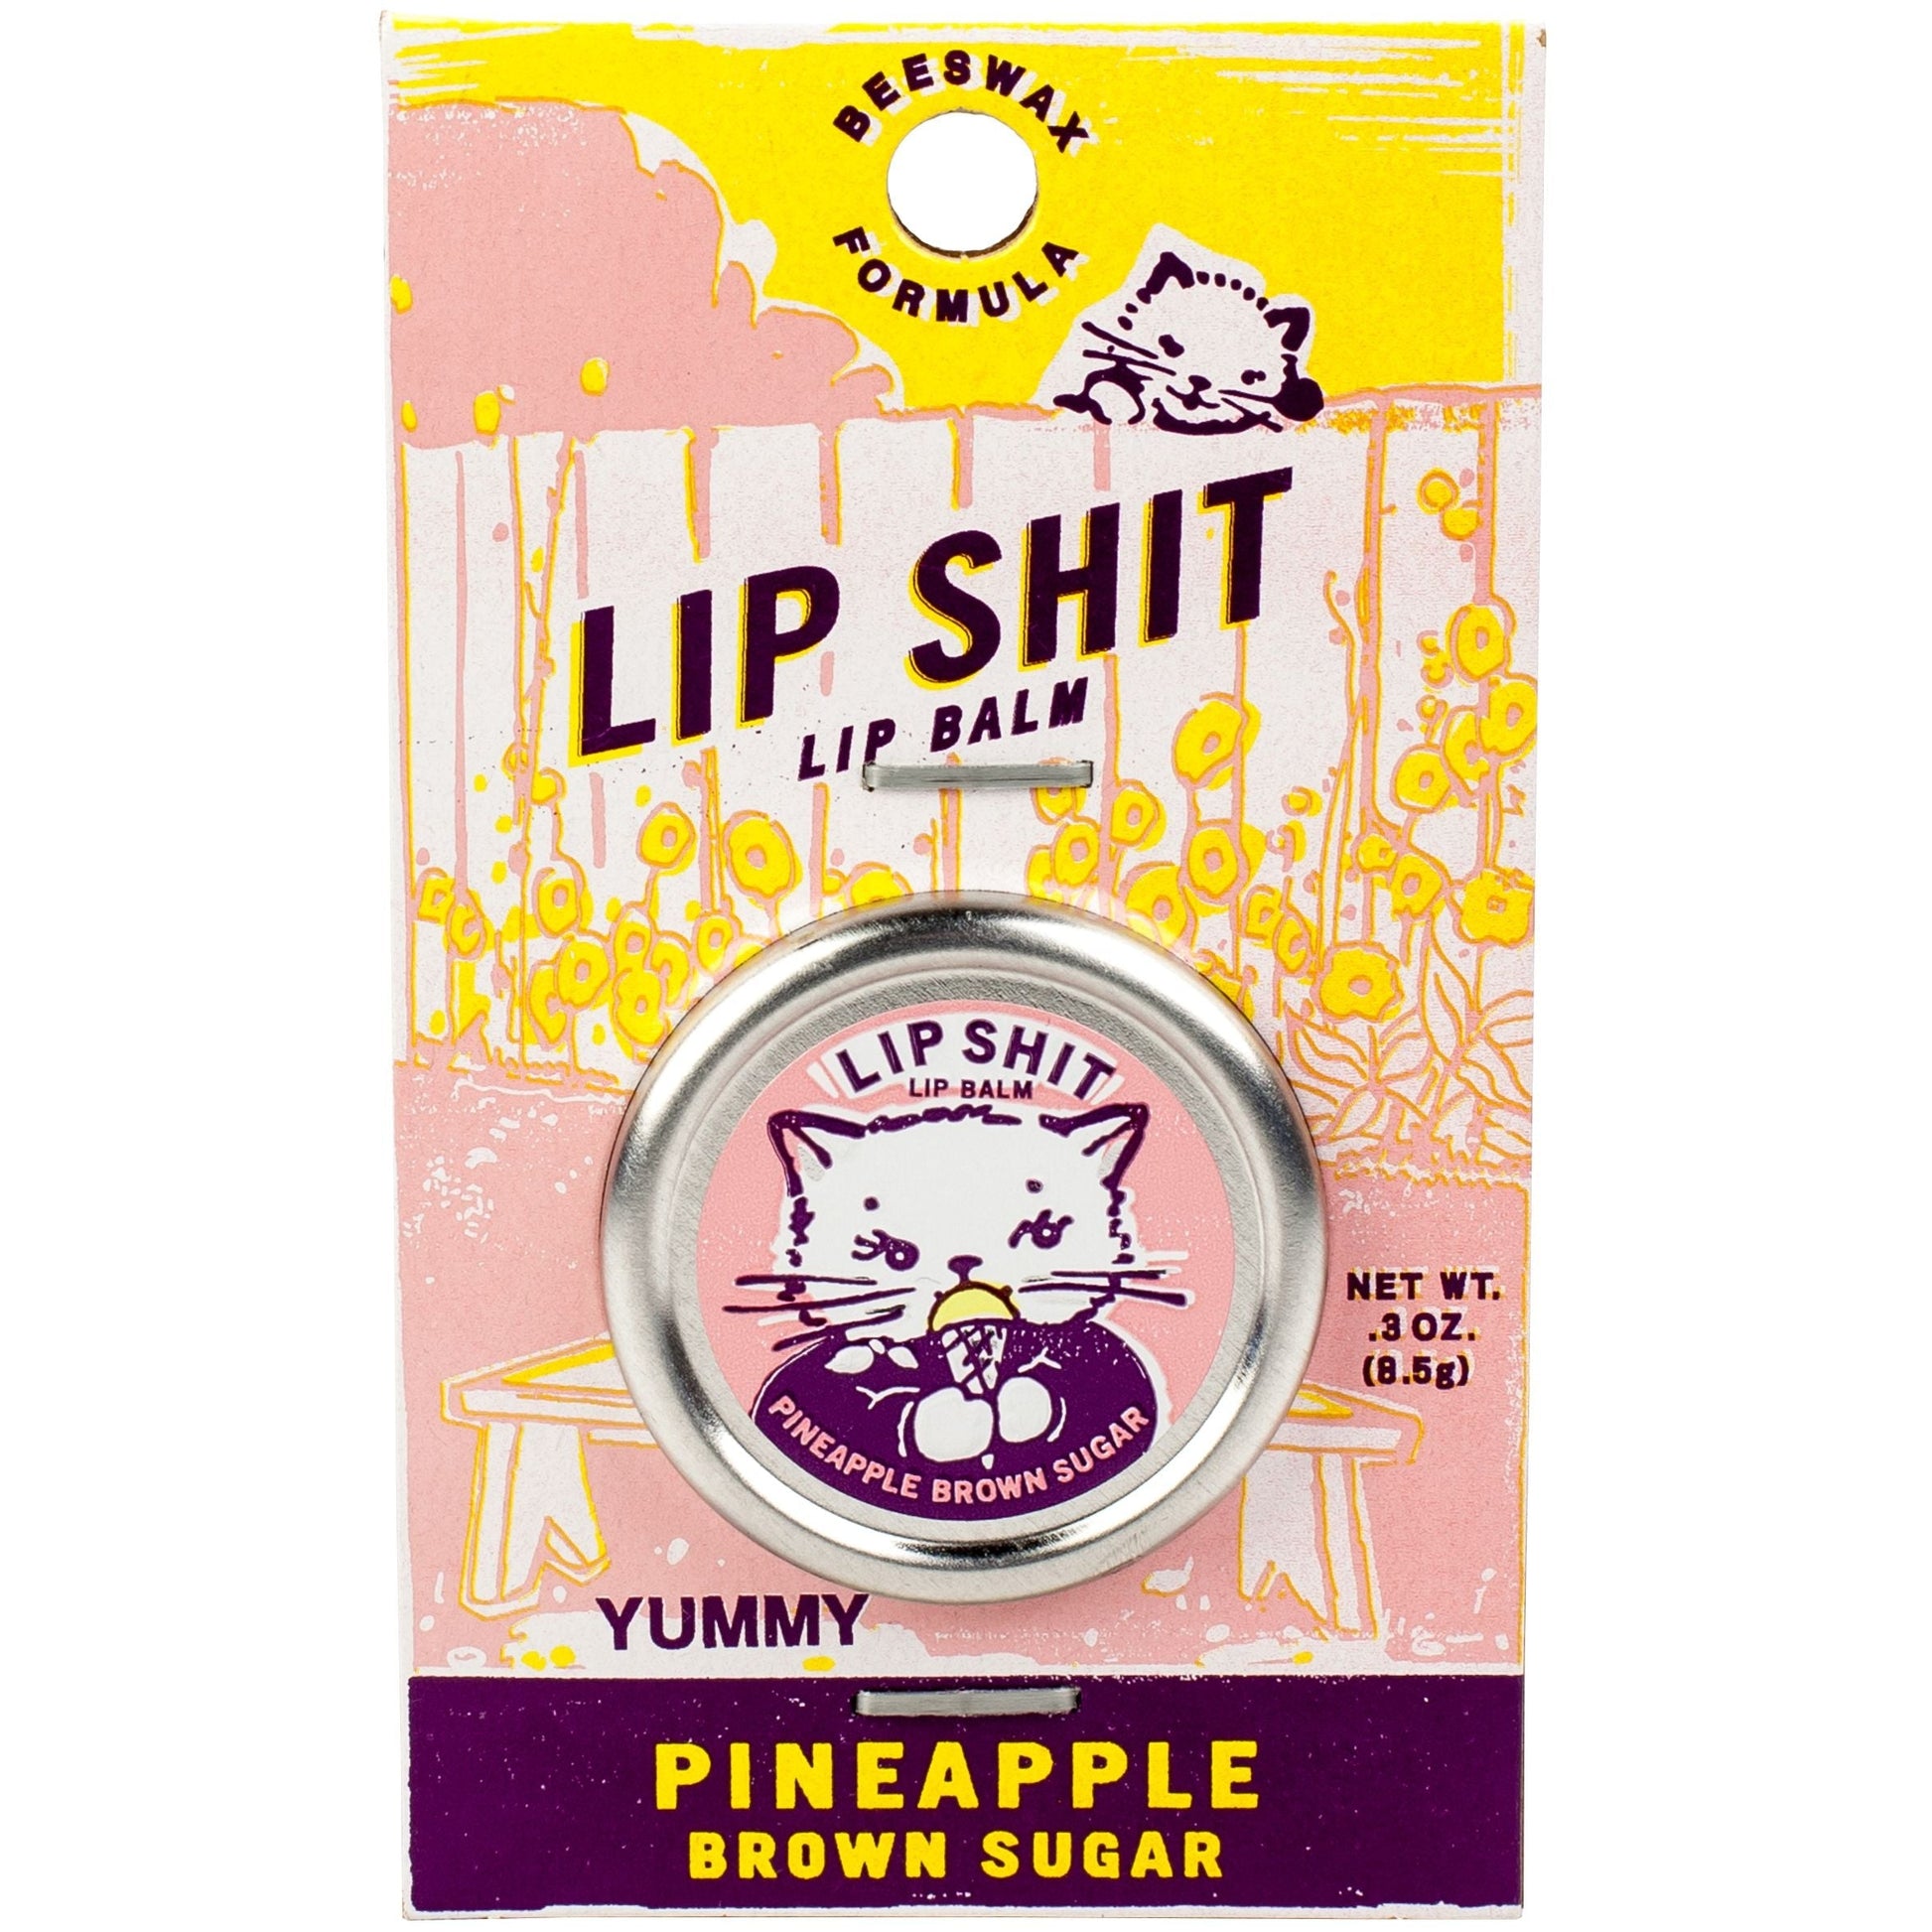 Lip Shit Lip Balm in Pineapple Brown Sugar Beeswax Formula